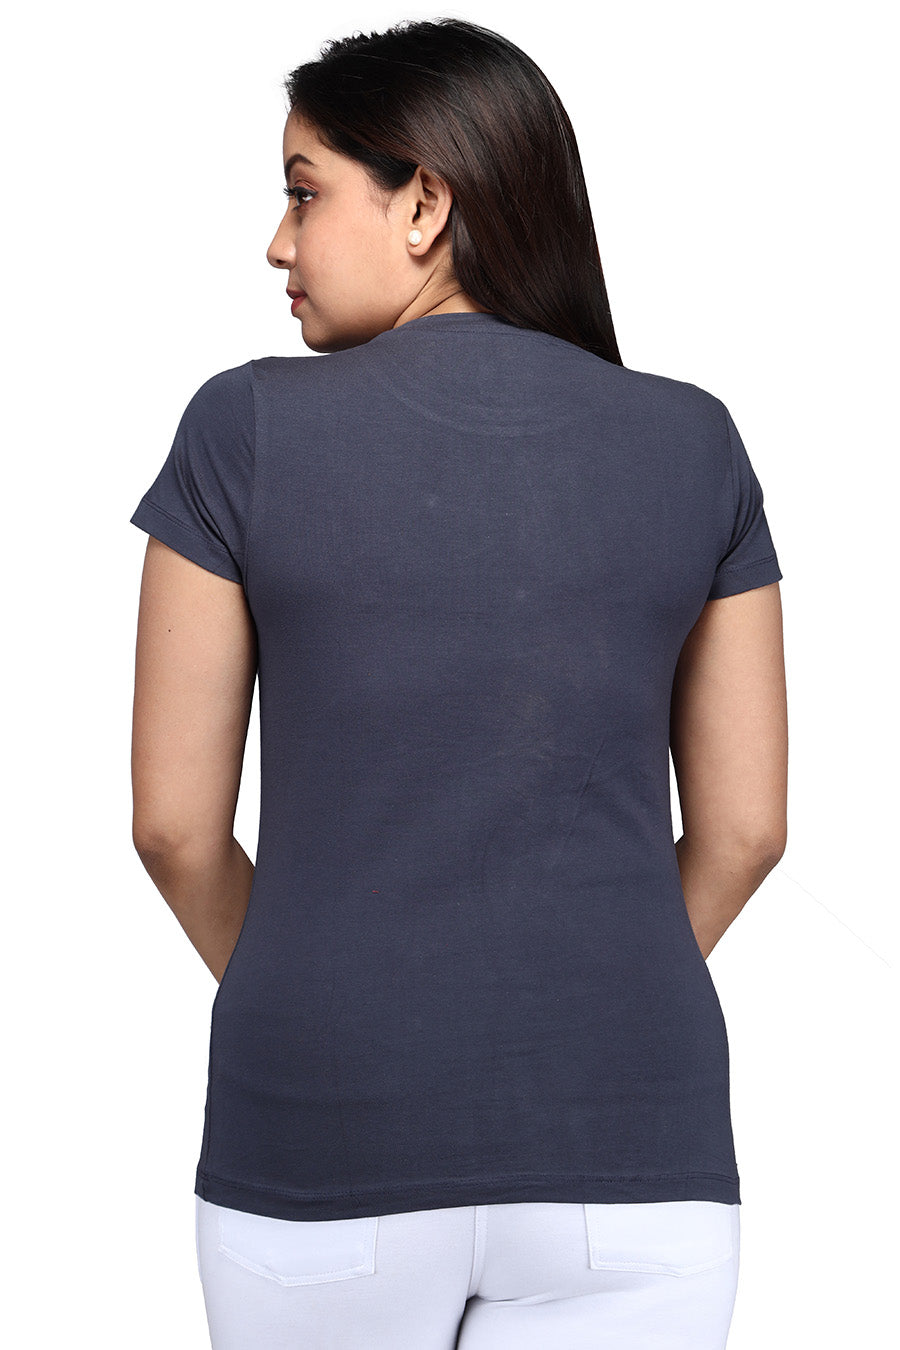 Comfort Lady Chest Print Half Sleeve Cotton Round Neck T-Shirt